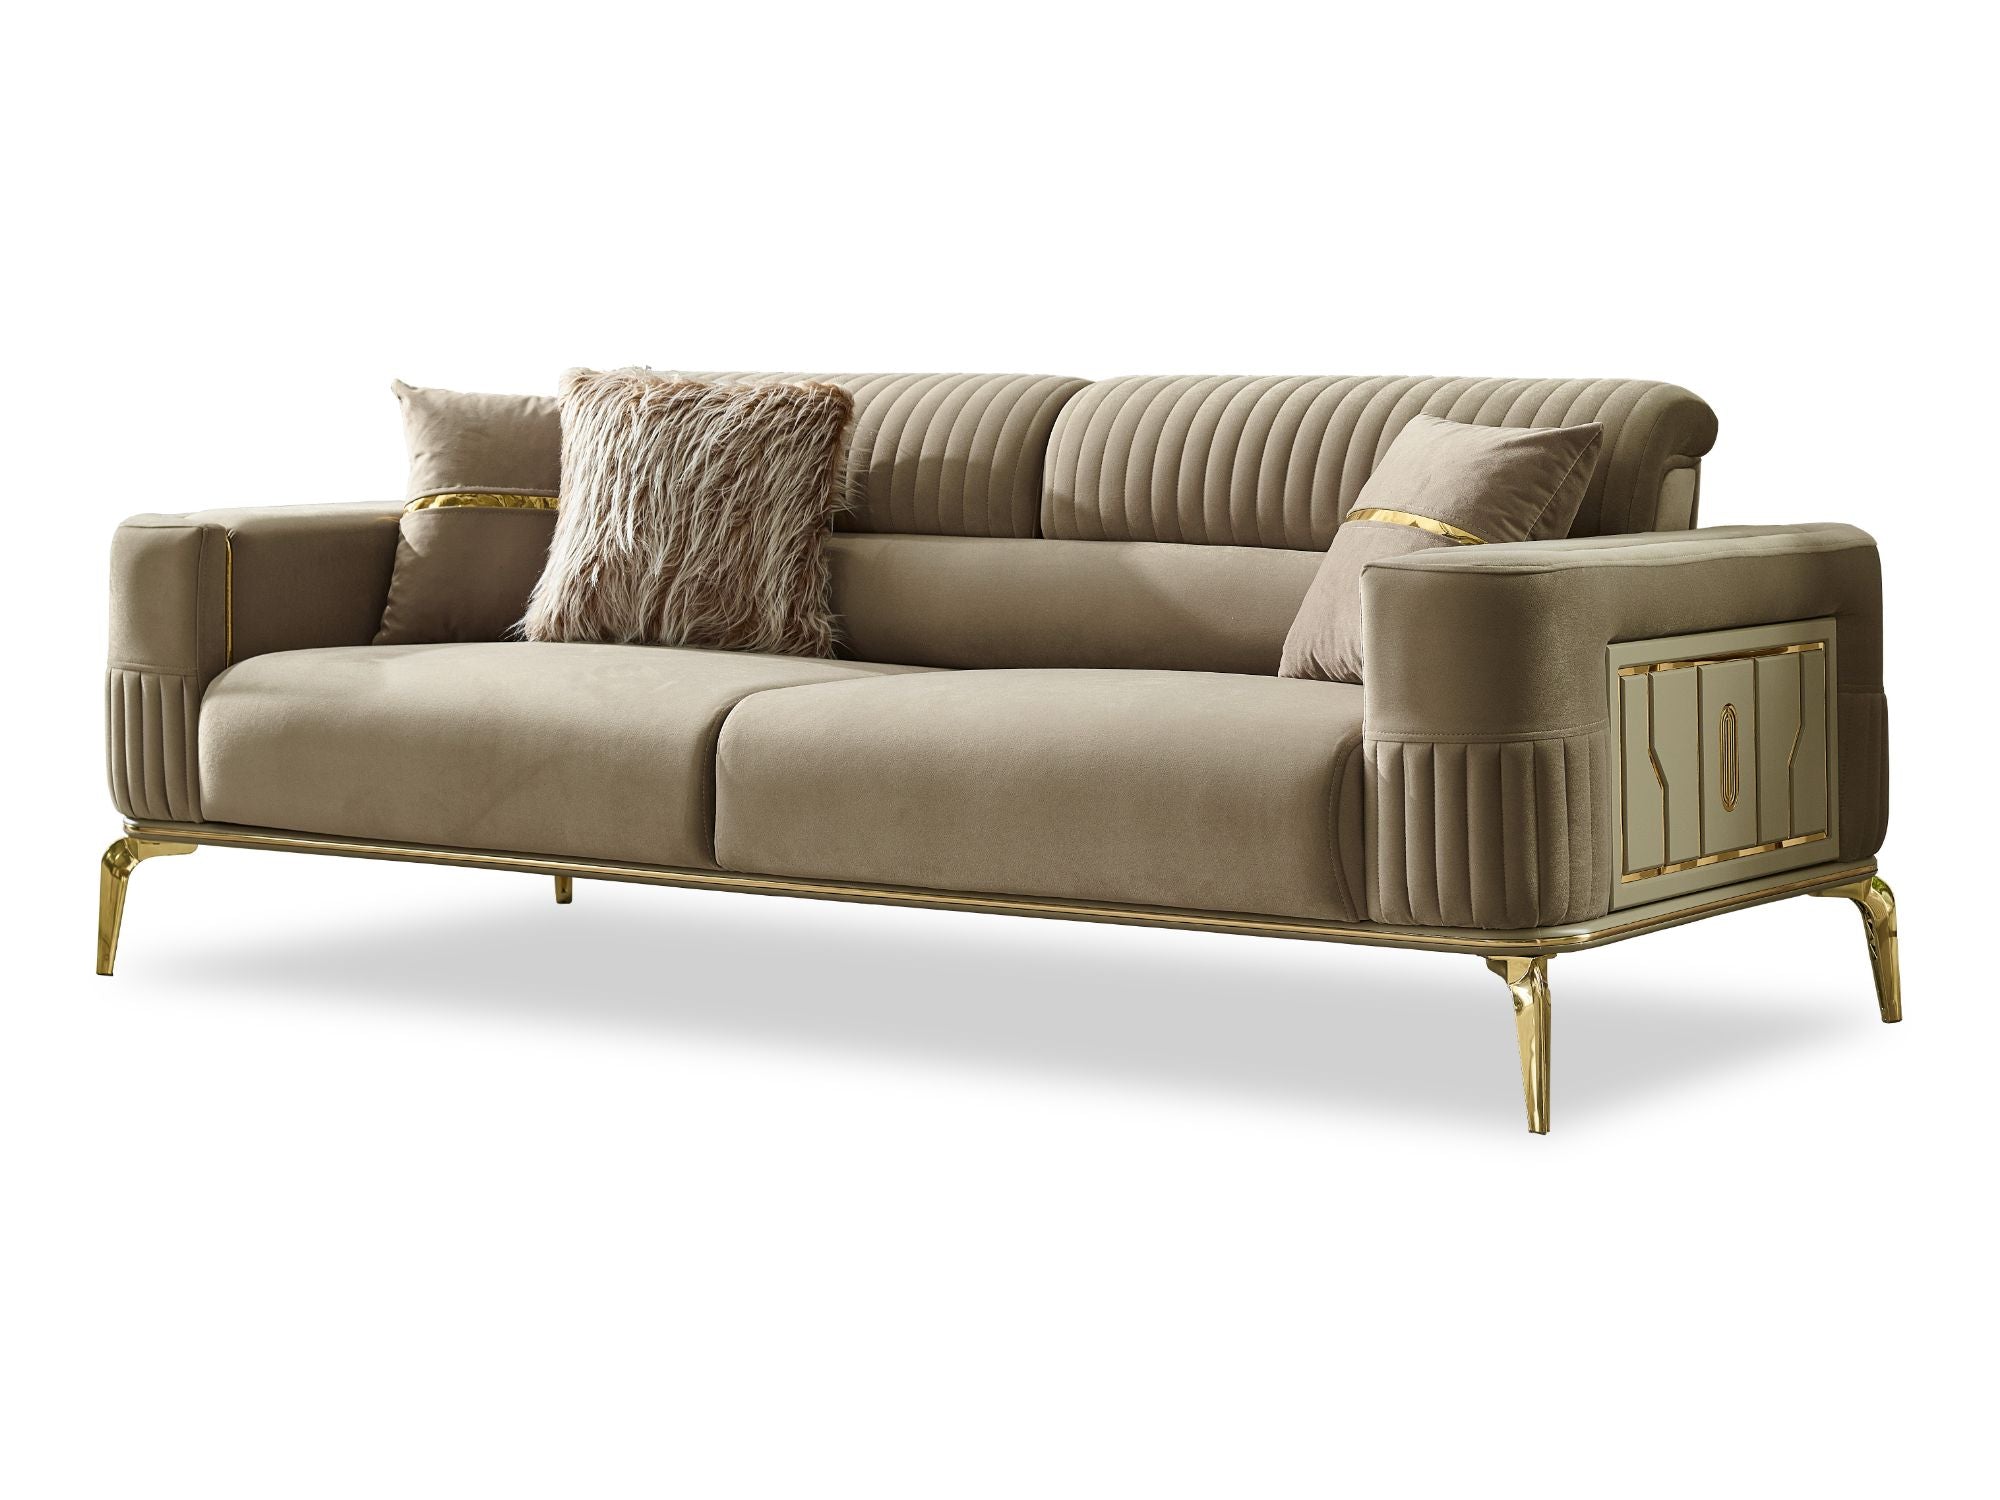 Armoni Convertible Livingroom (2 Sofa & 2 Chair) Beige With Gold Legs